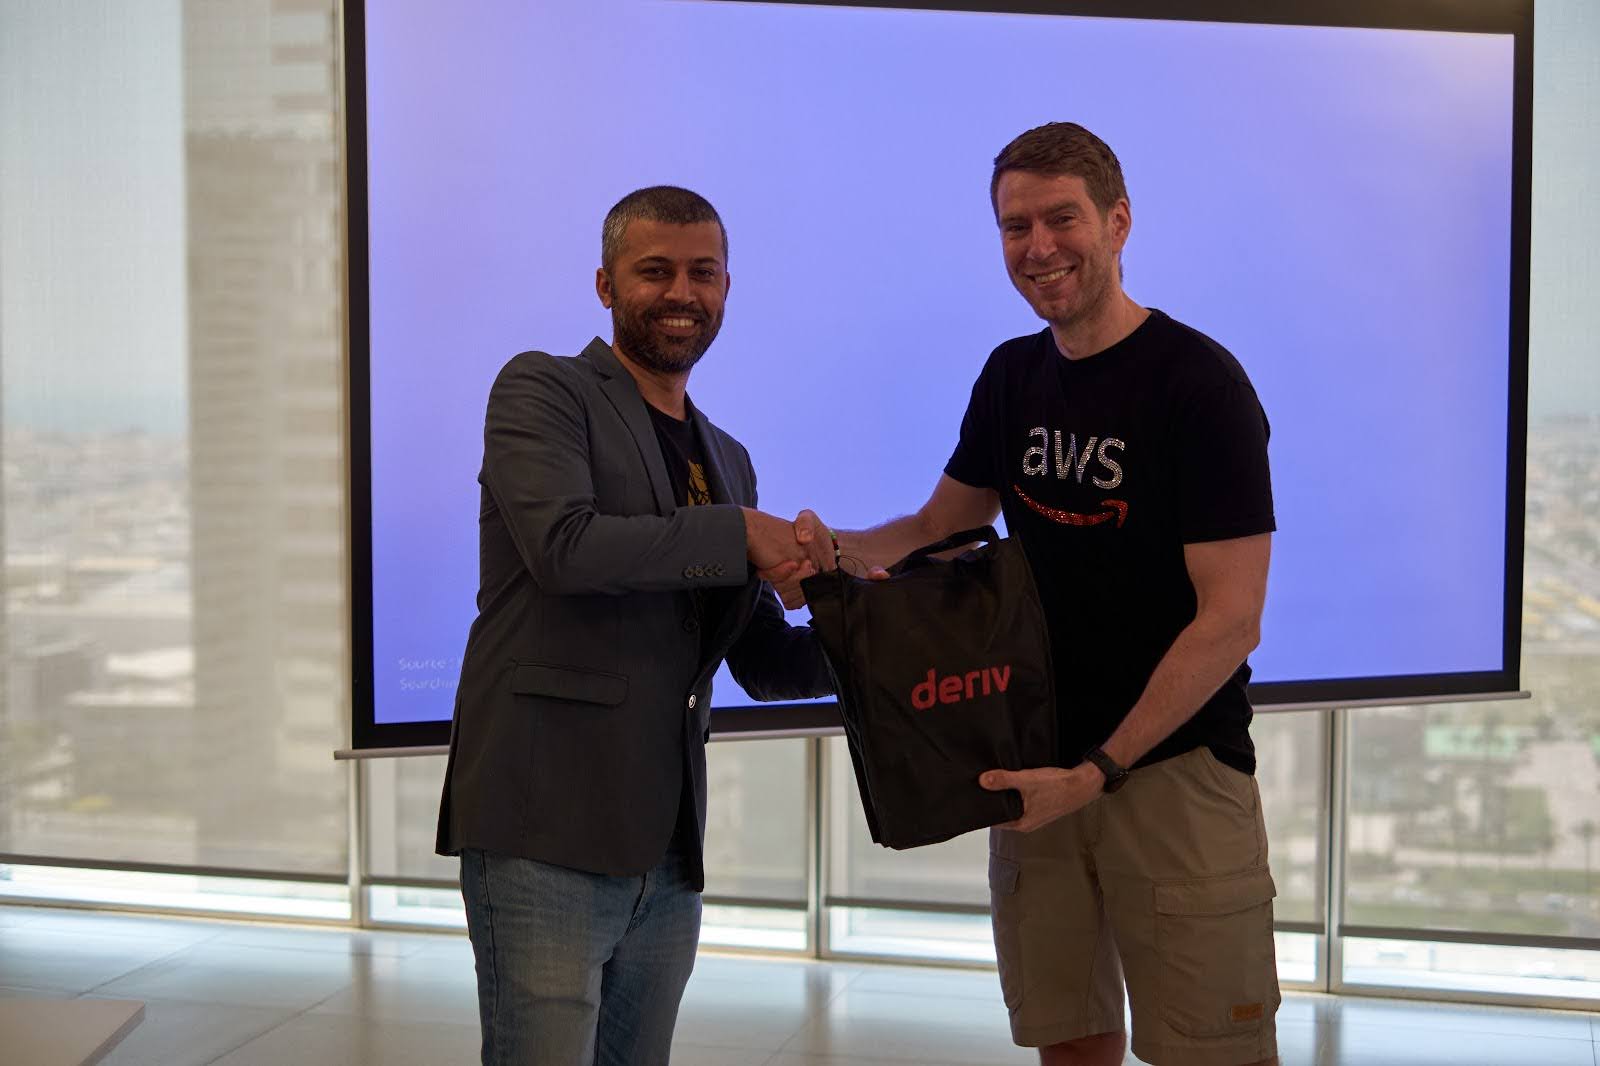 AWS Community Head receiving a Deriv welcome kit